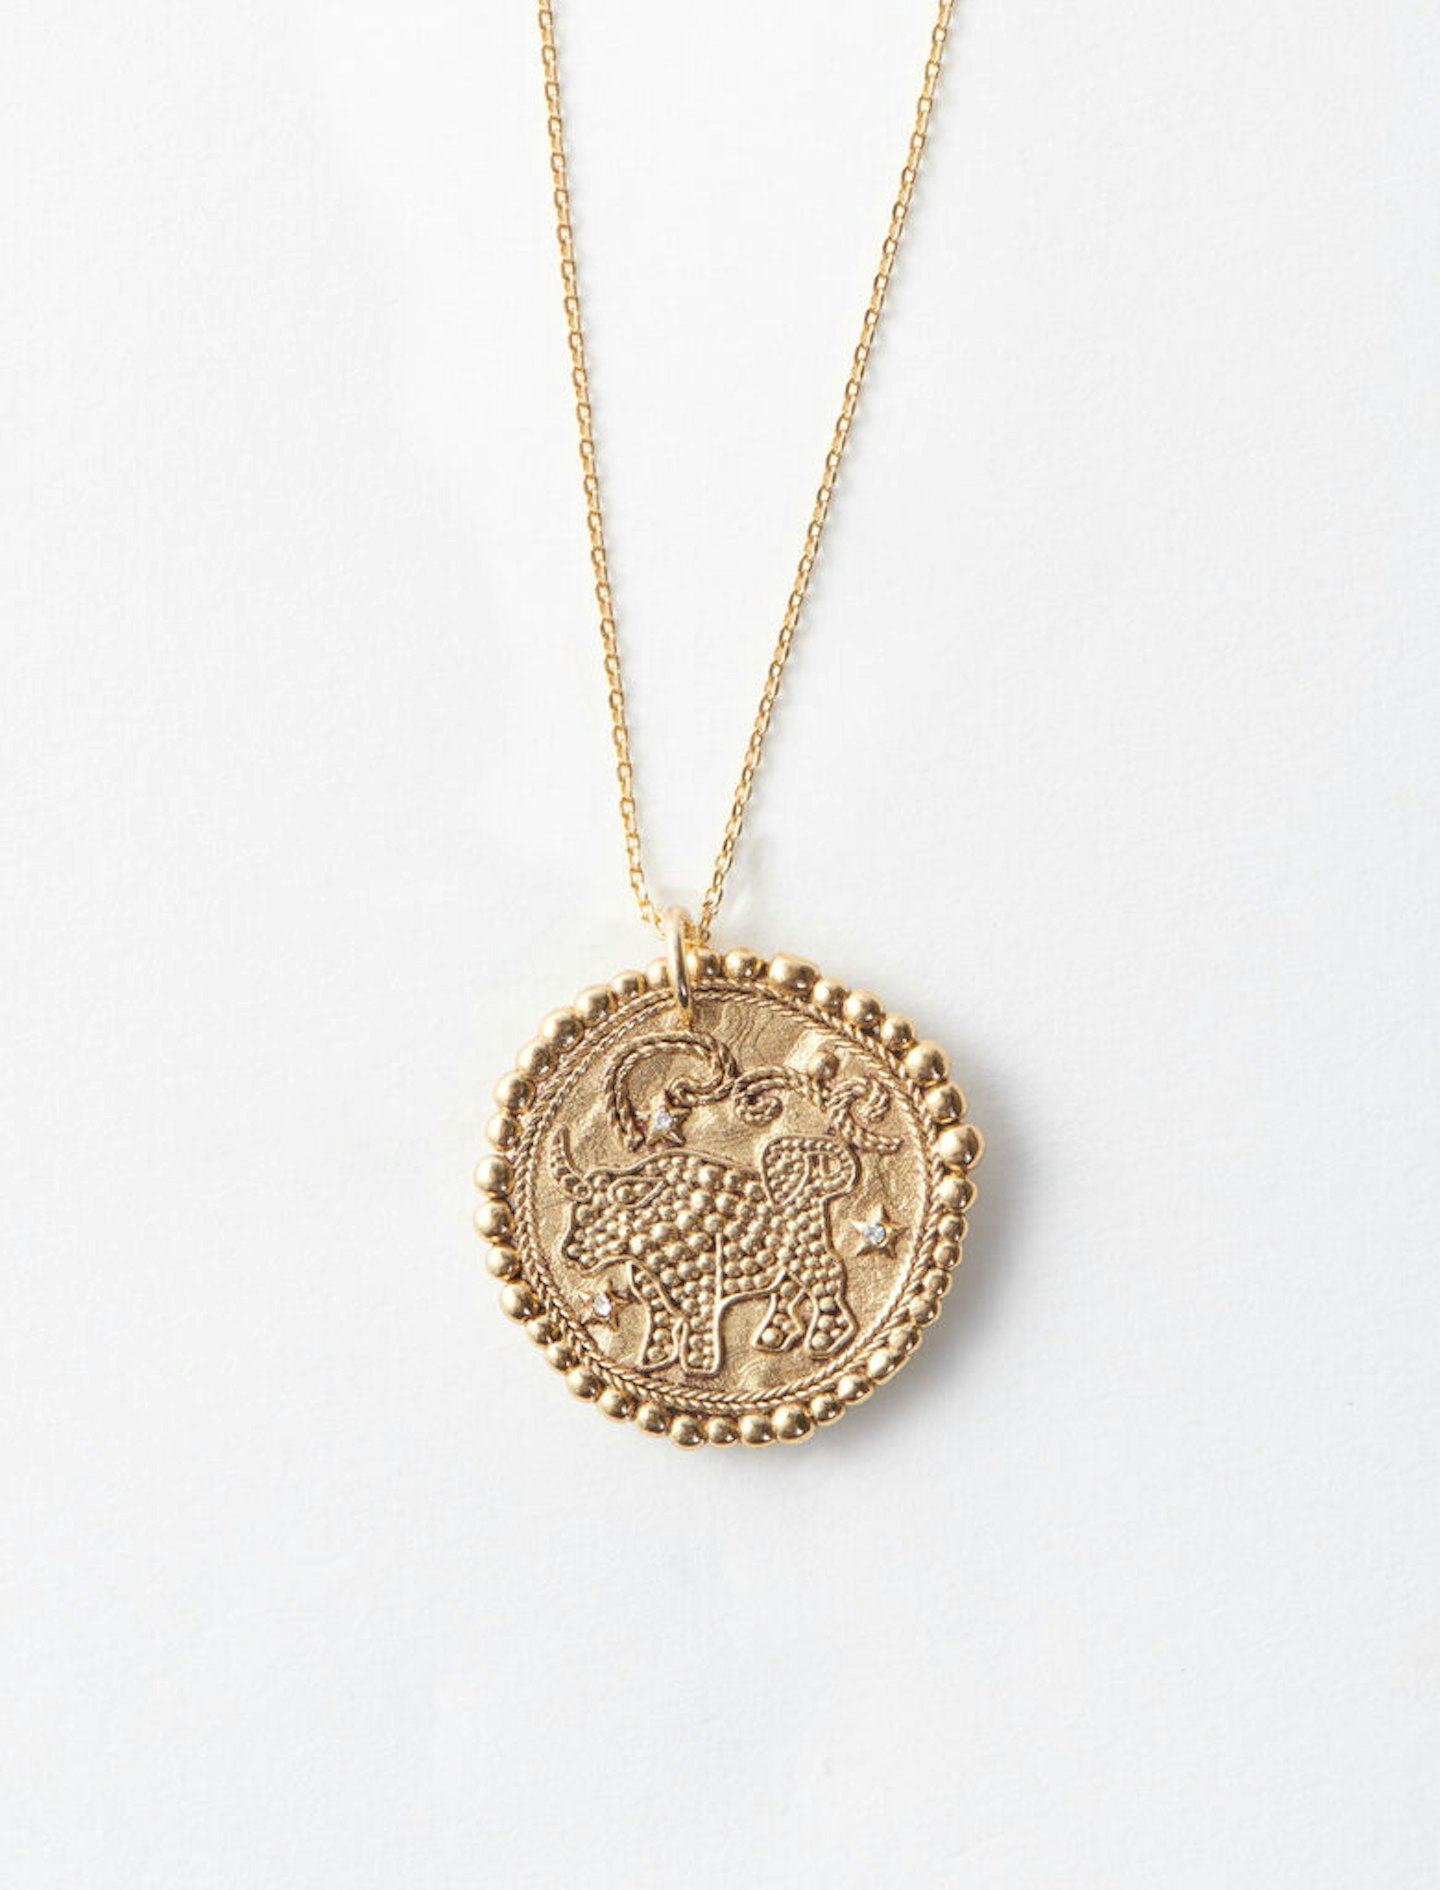 Maje, Taurus Zodiac Sign Necklace, £79